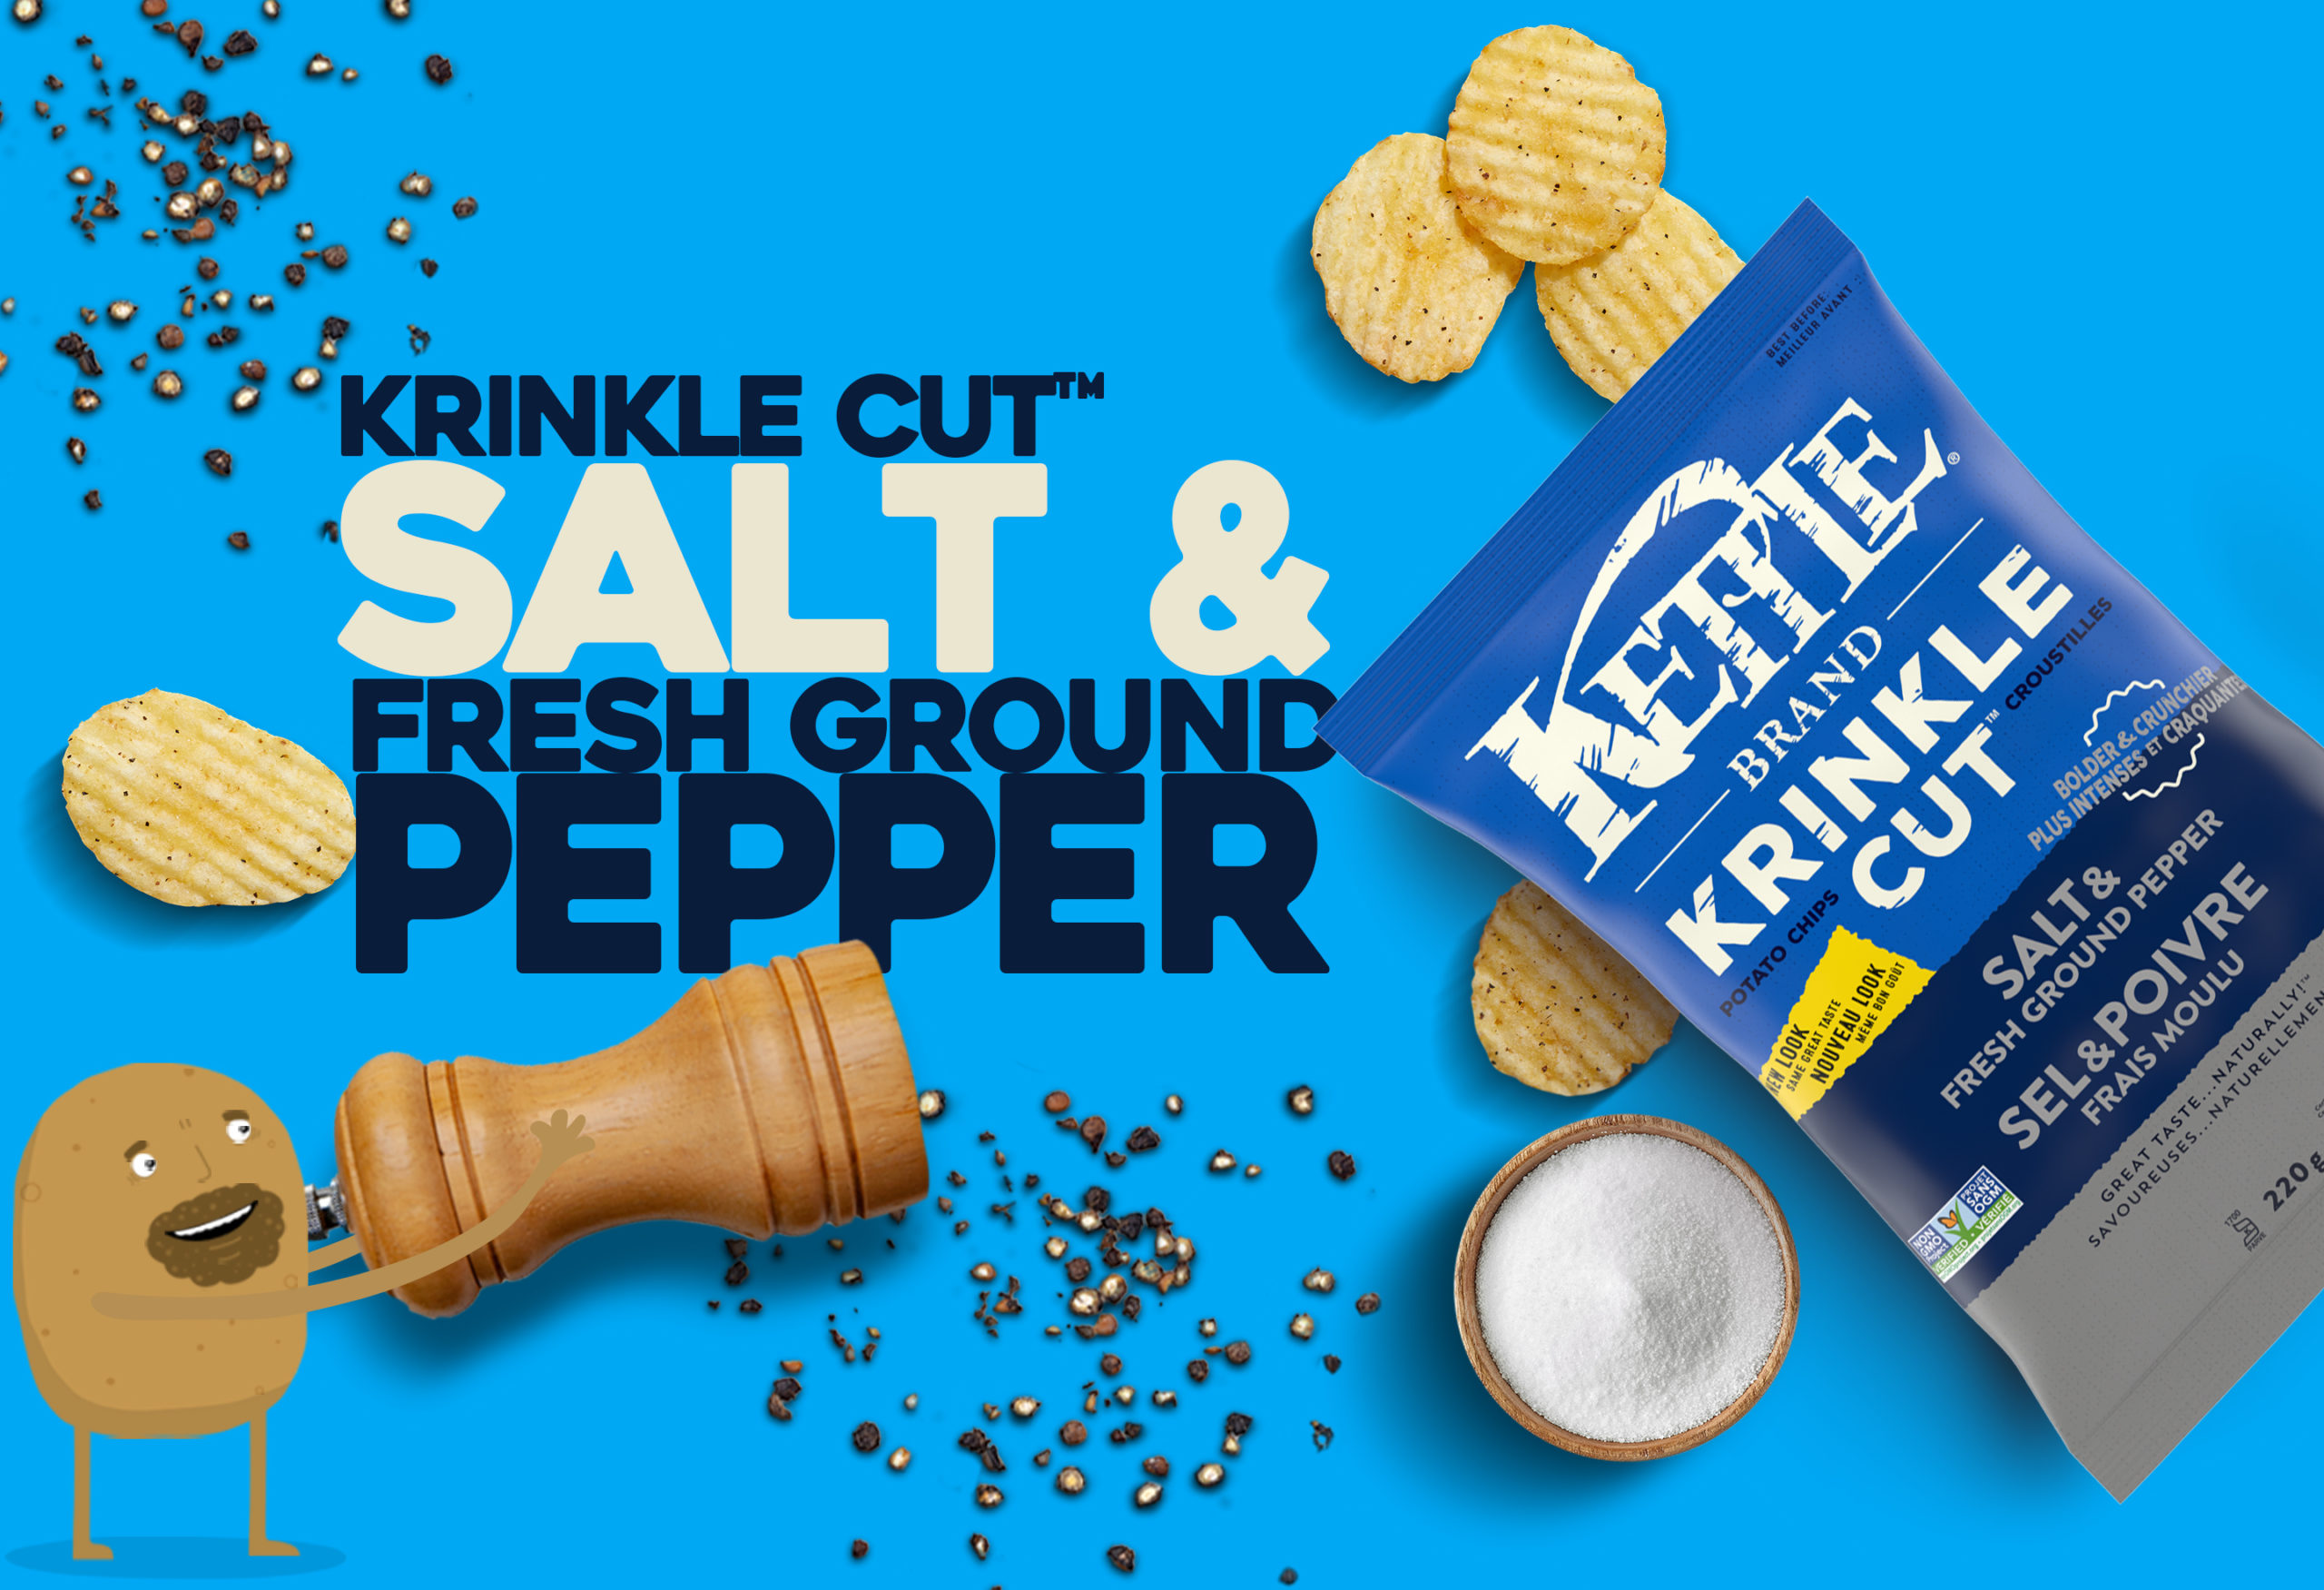 Kettle Brand Krinkle Cut Potato Chips Salt and Fresh Ground Pepper